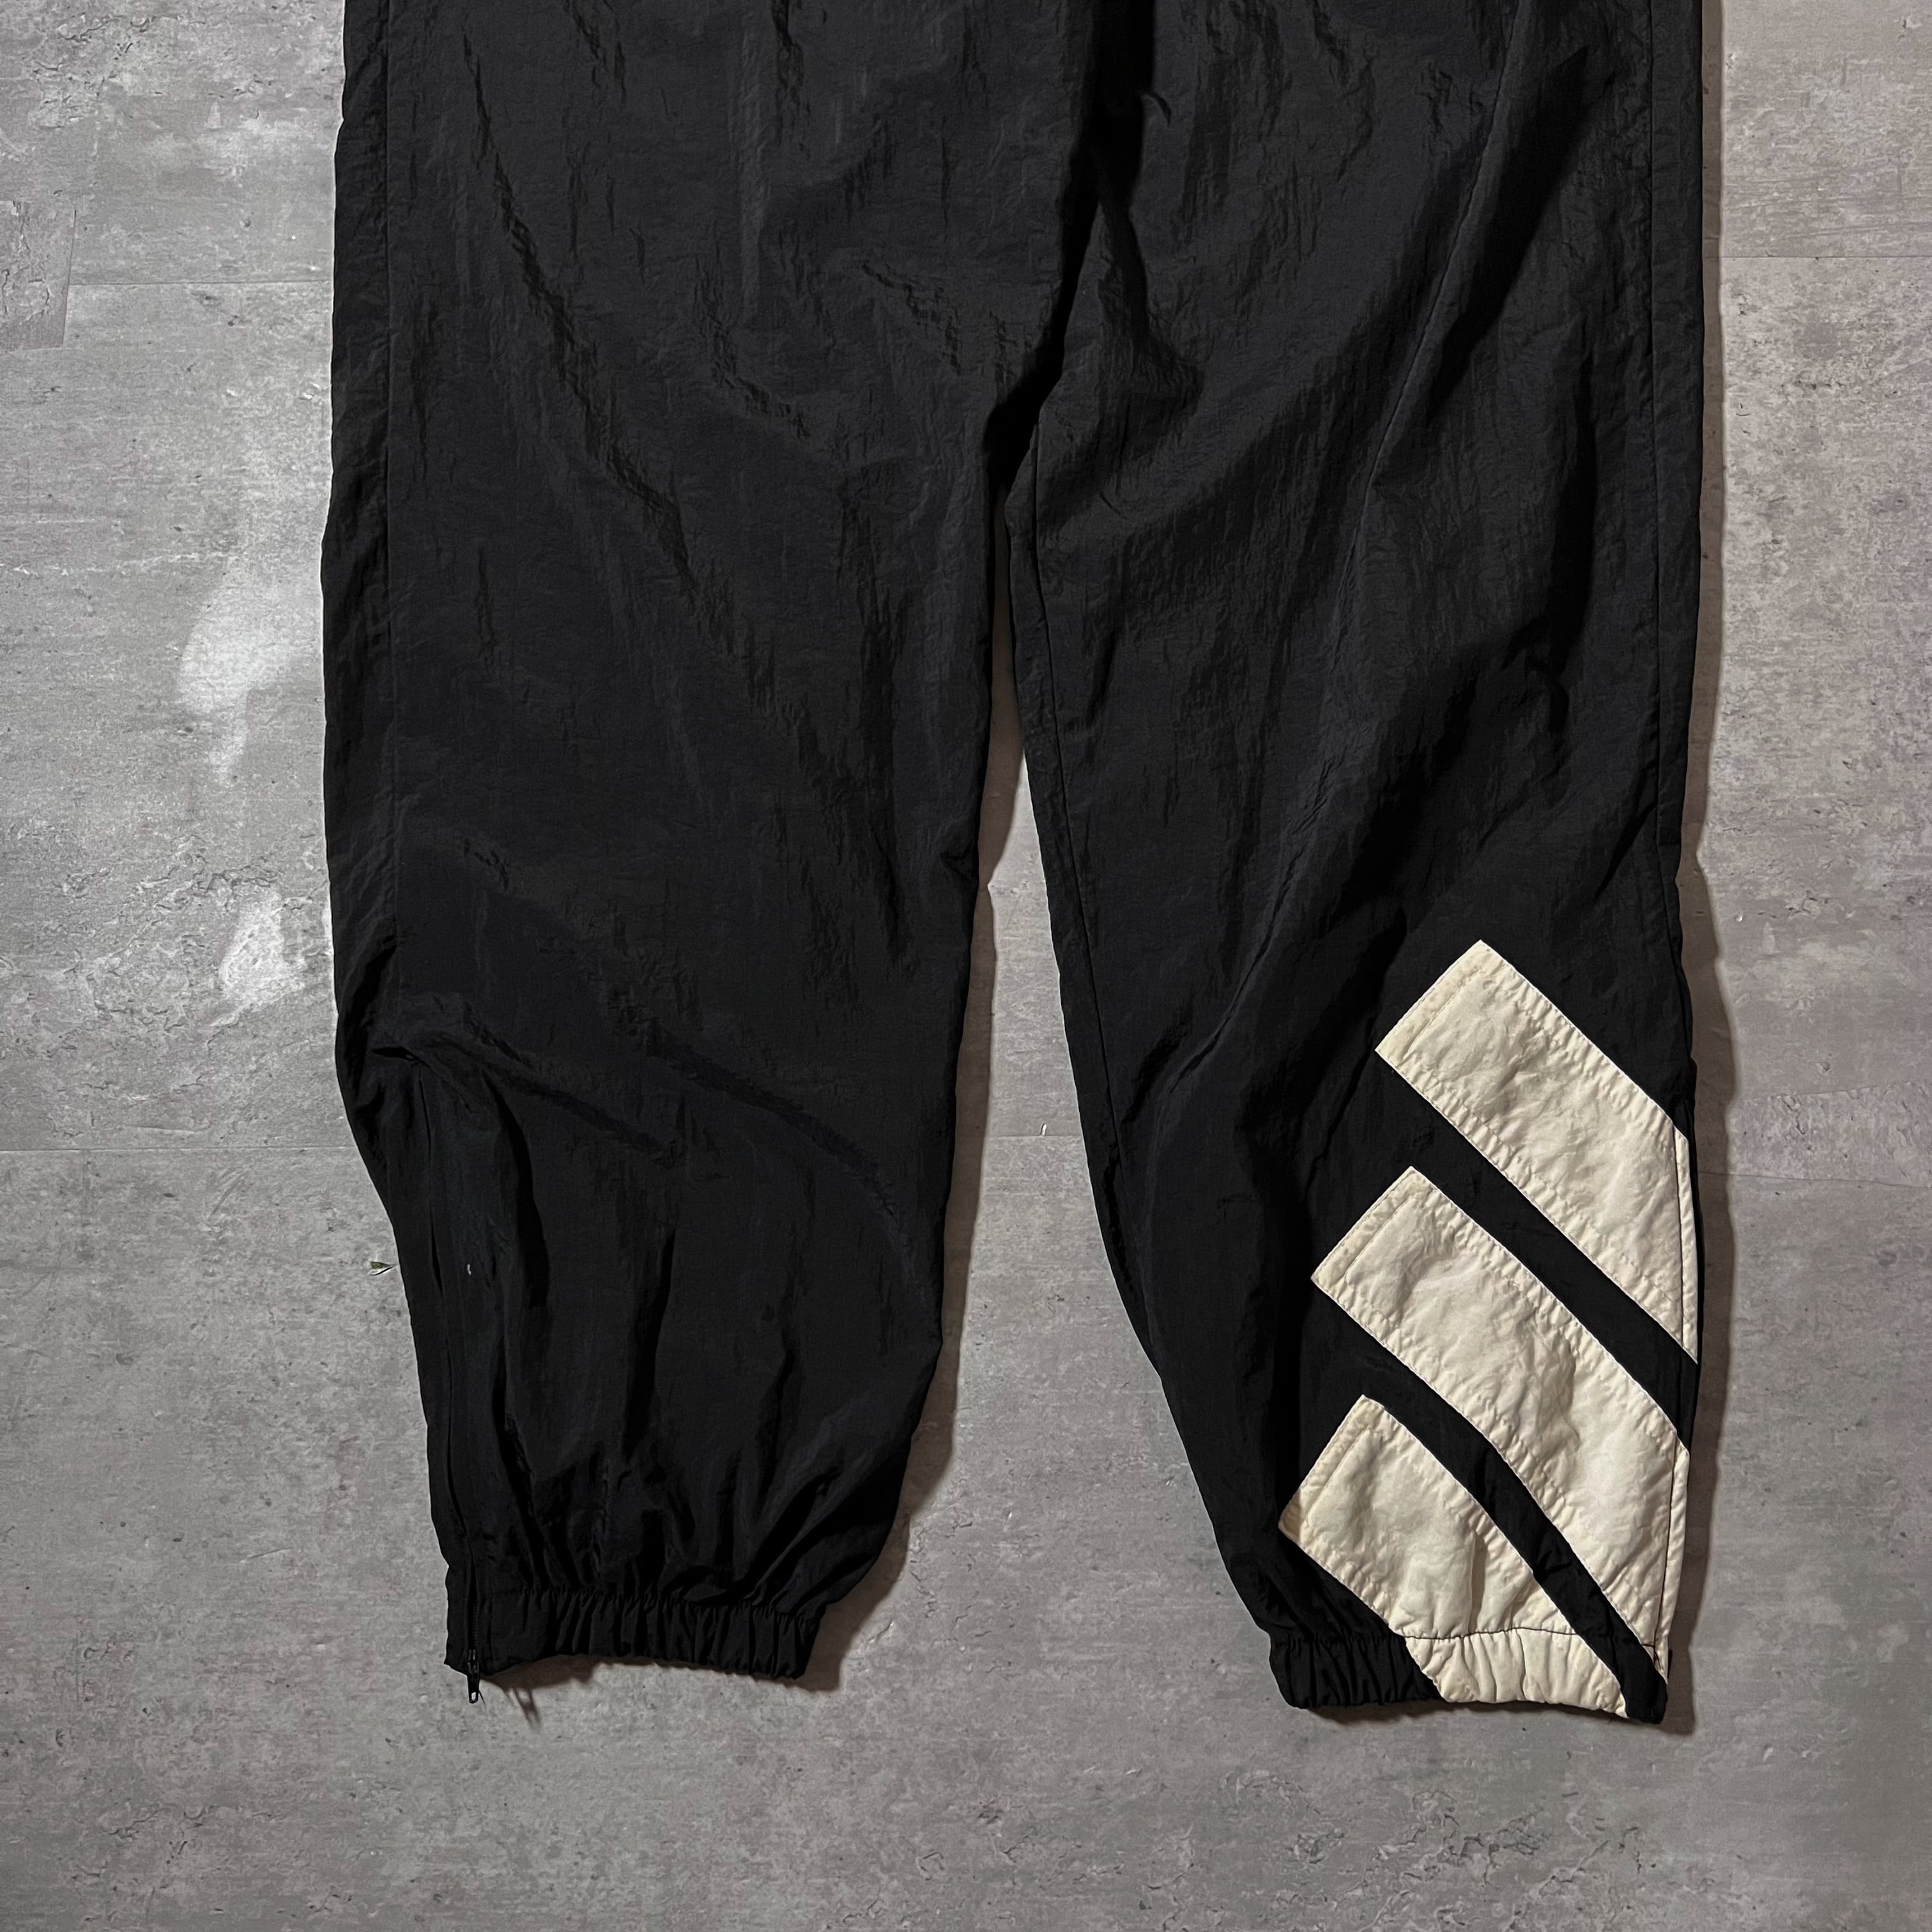 90s “adidas” Trefoil logo black nylon pants 90年代 アディダス